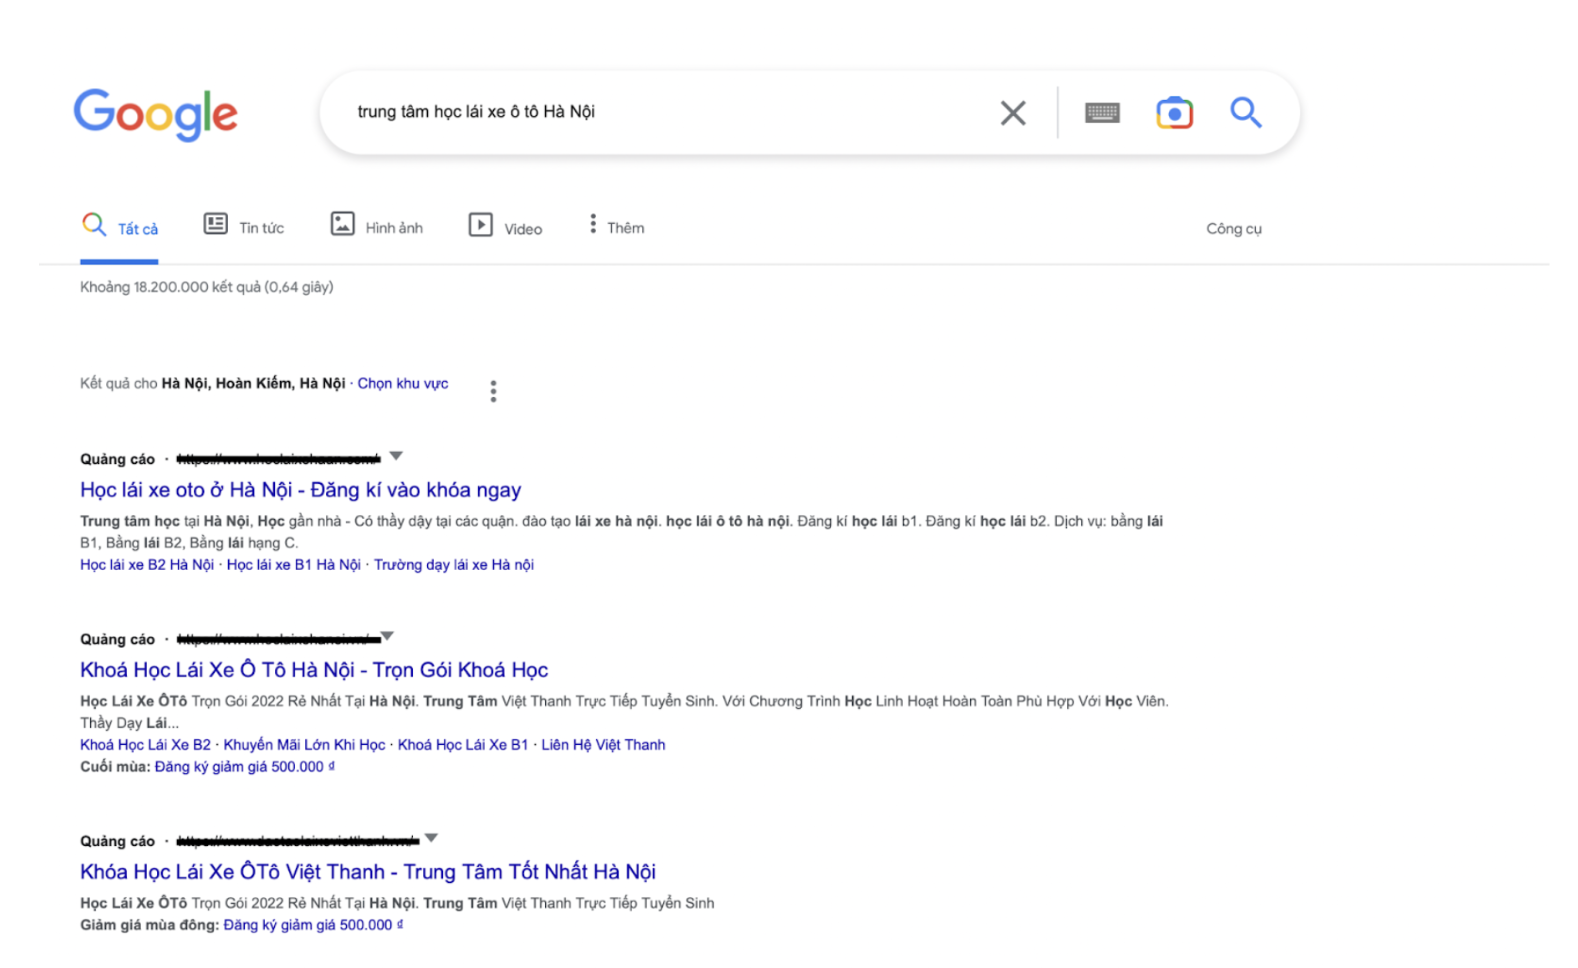 vi tri quang cao google ads tim kiem tren trang web tim kiem cua google